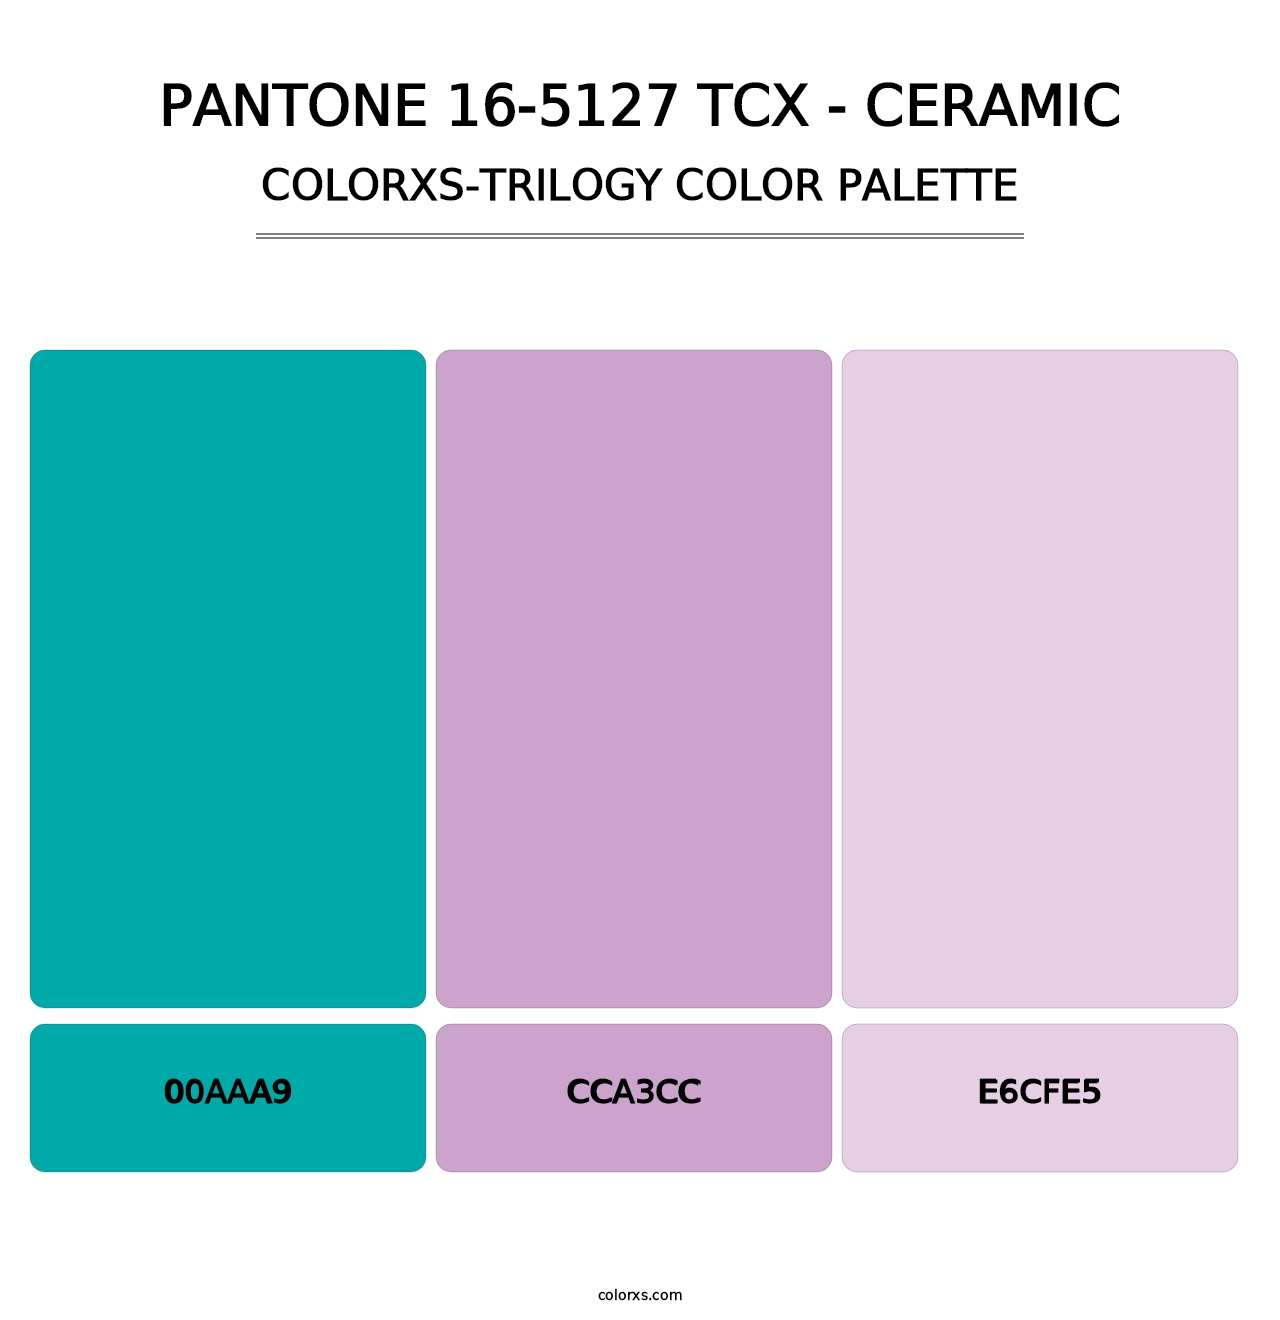 PANTONE 16-5127 TCX - Ceramic - Colorxs Trilogy Palette